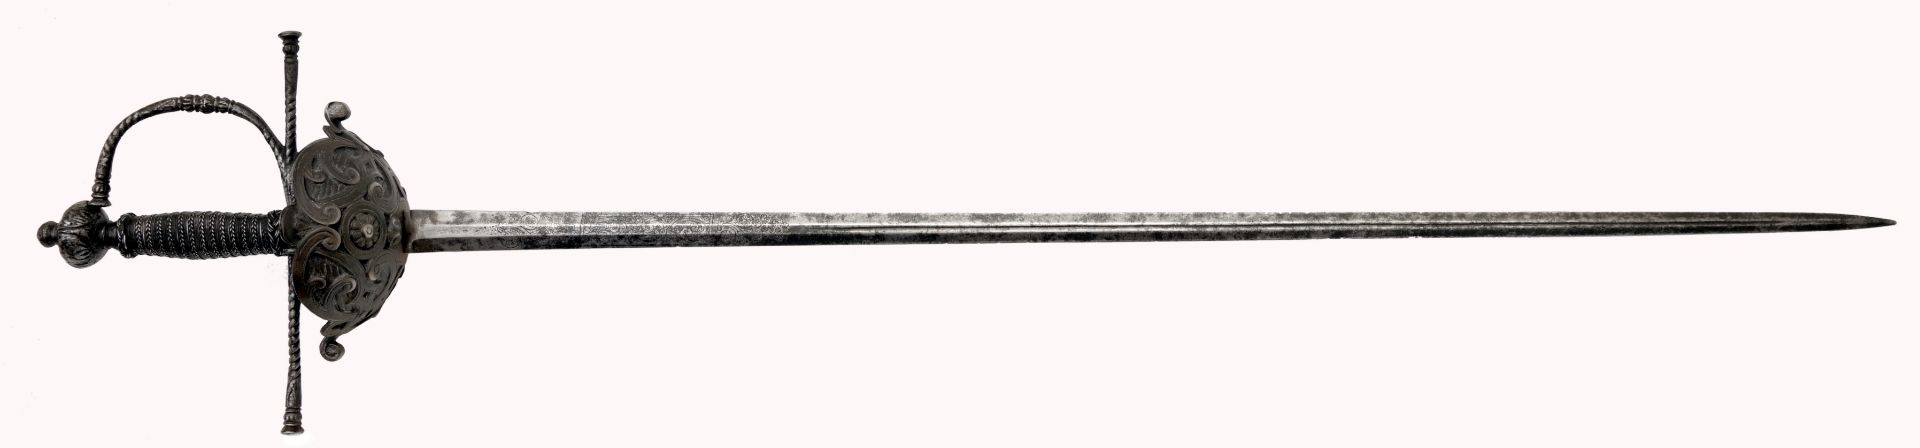 Dish-hilt sword - Image 2 of 4